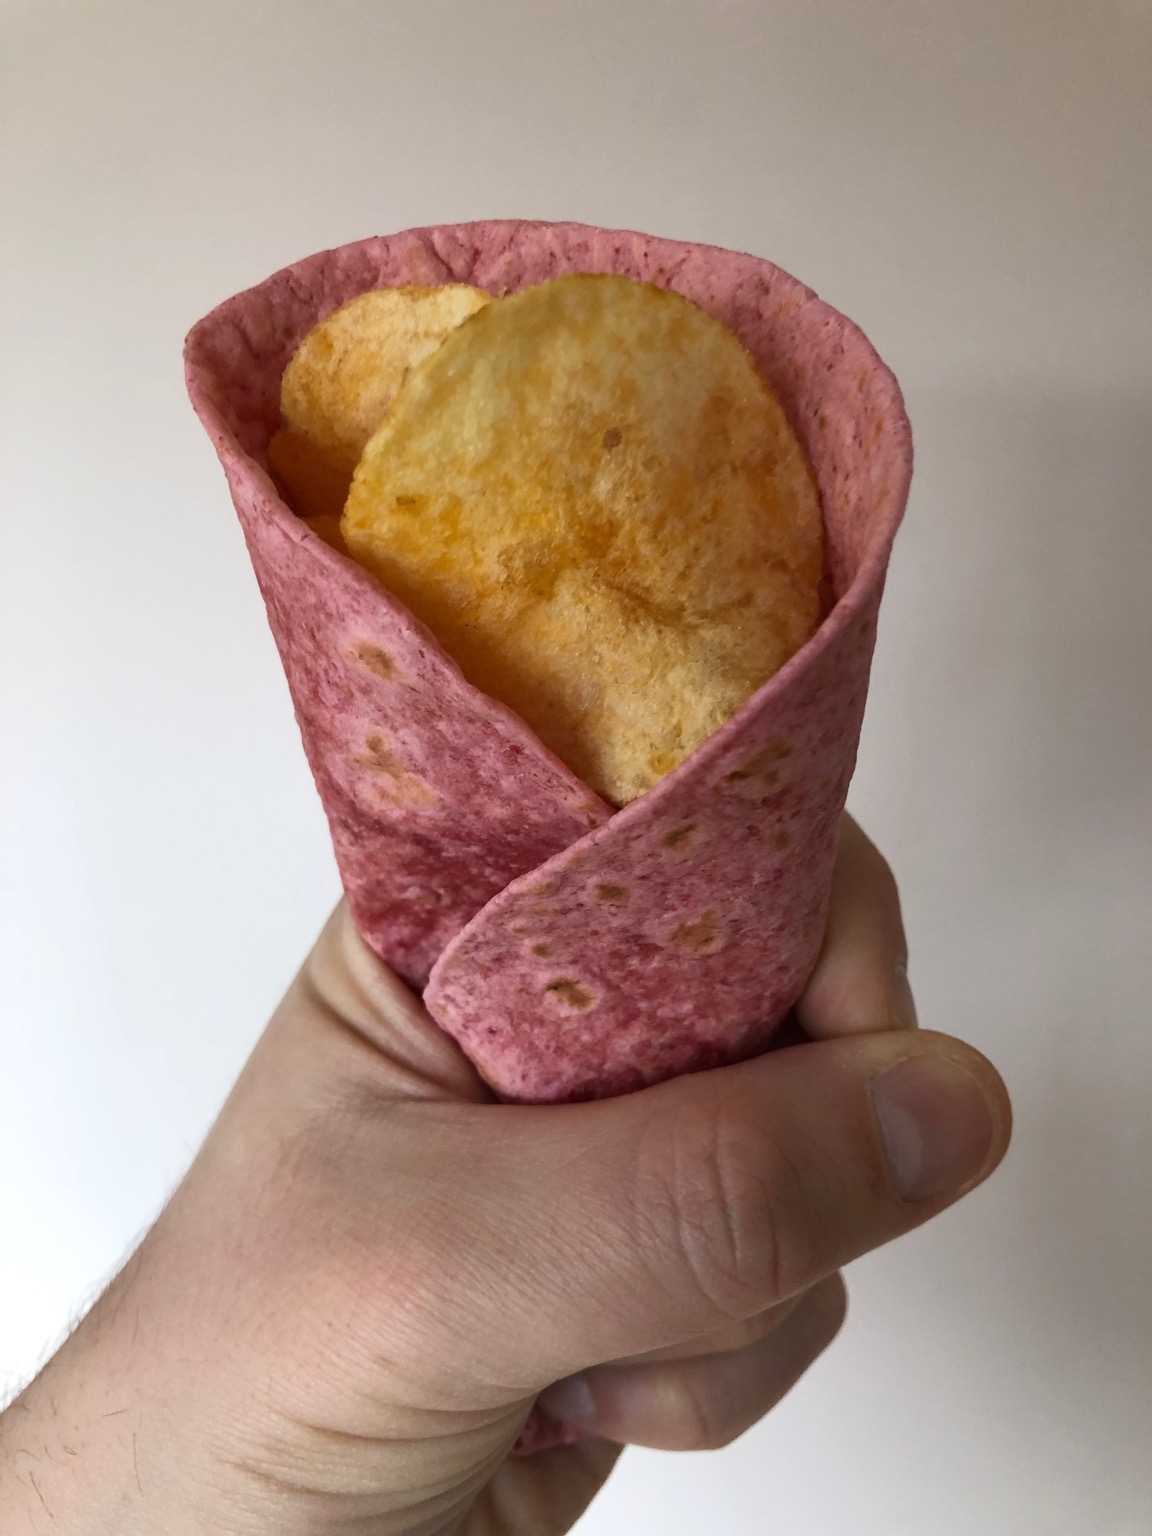 Potato crisps held in a pink tortilla wrap